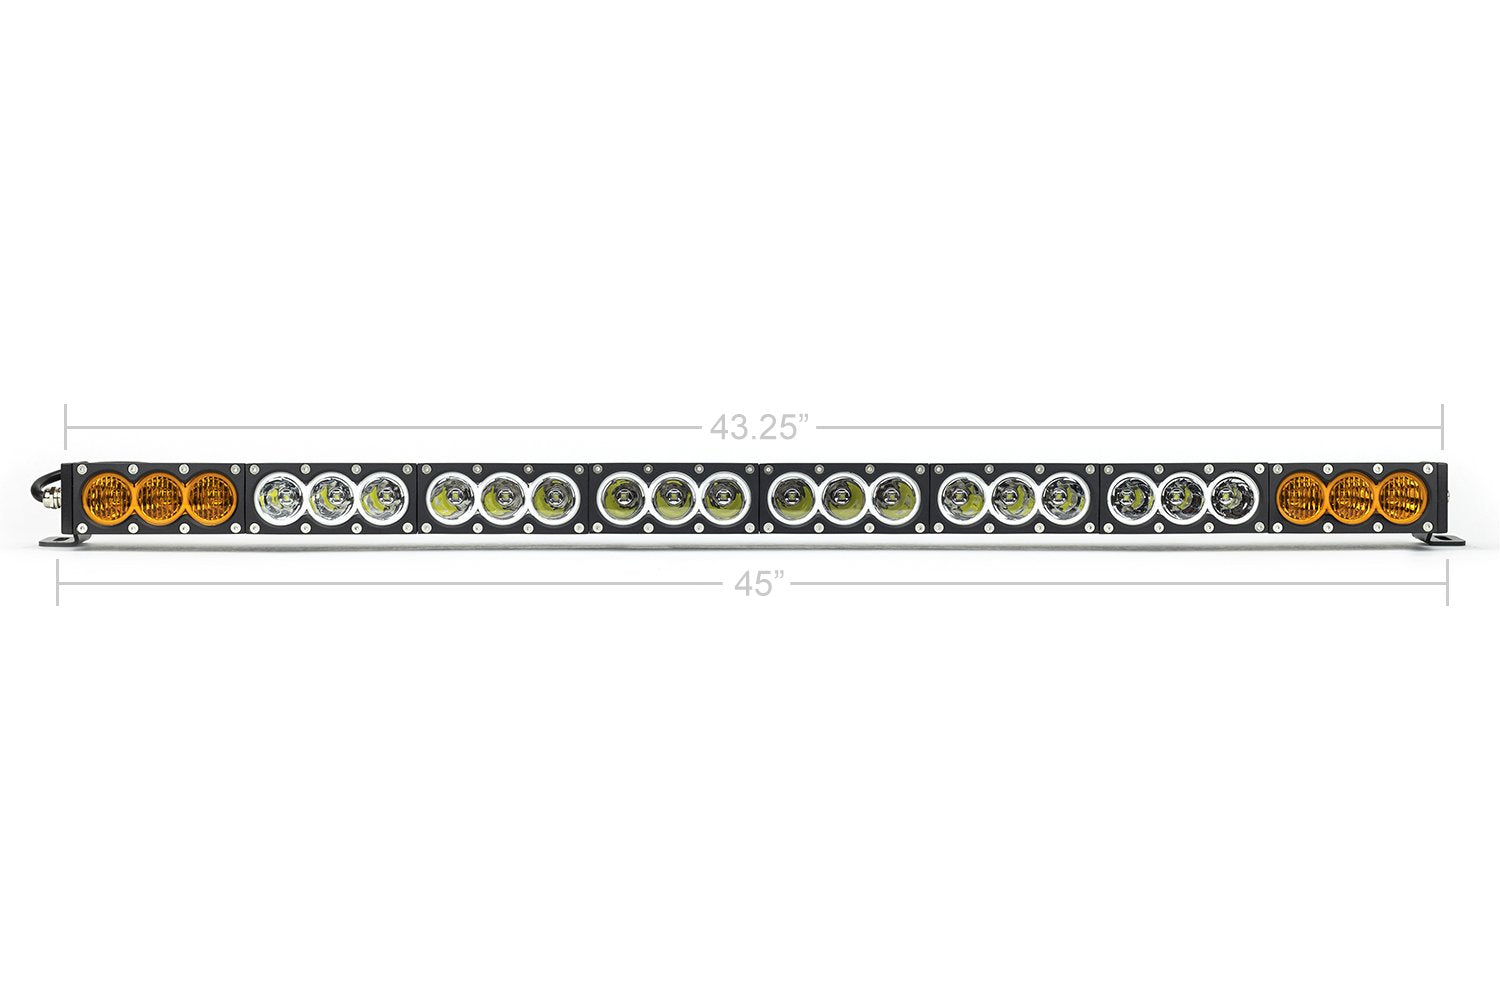 Cali Raised LED 43" Amber/White Dual Function LED Light